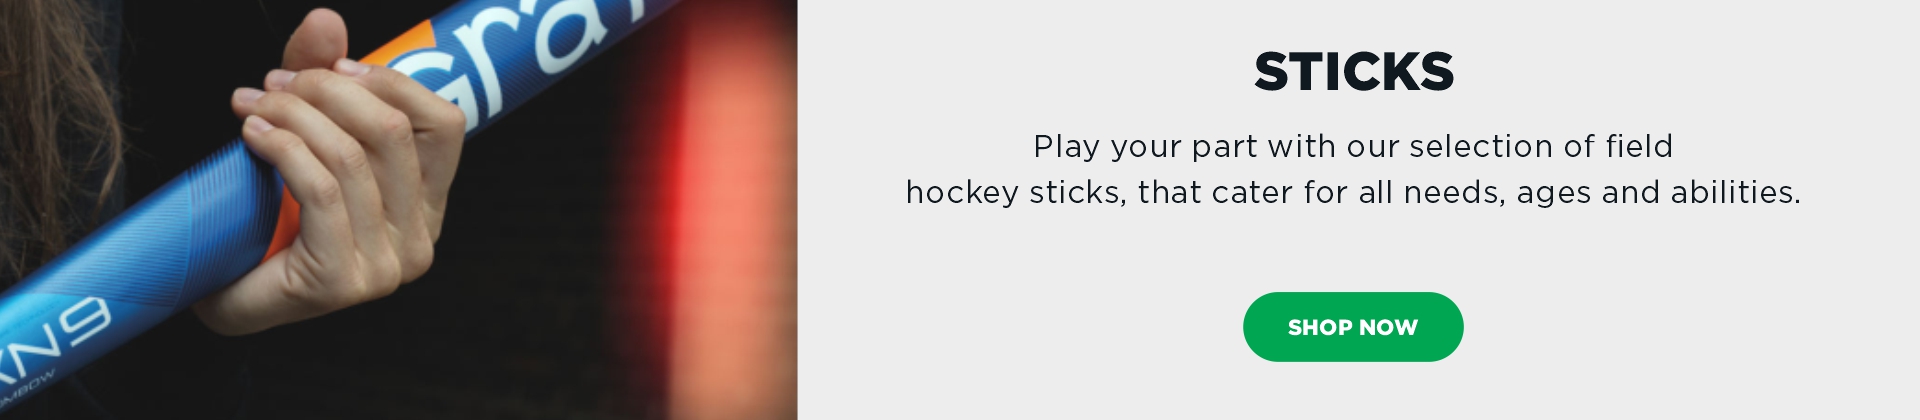 Elverys_Hockey_Sticks_Banner_1920x420_New.jpg